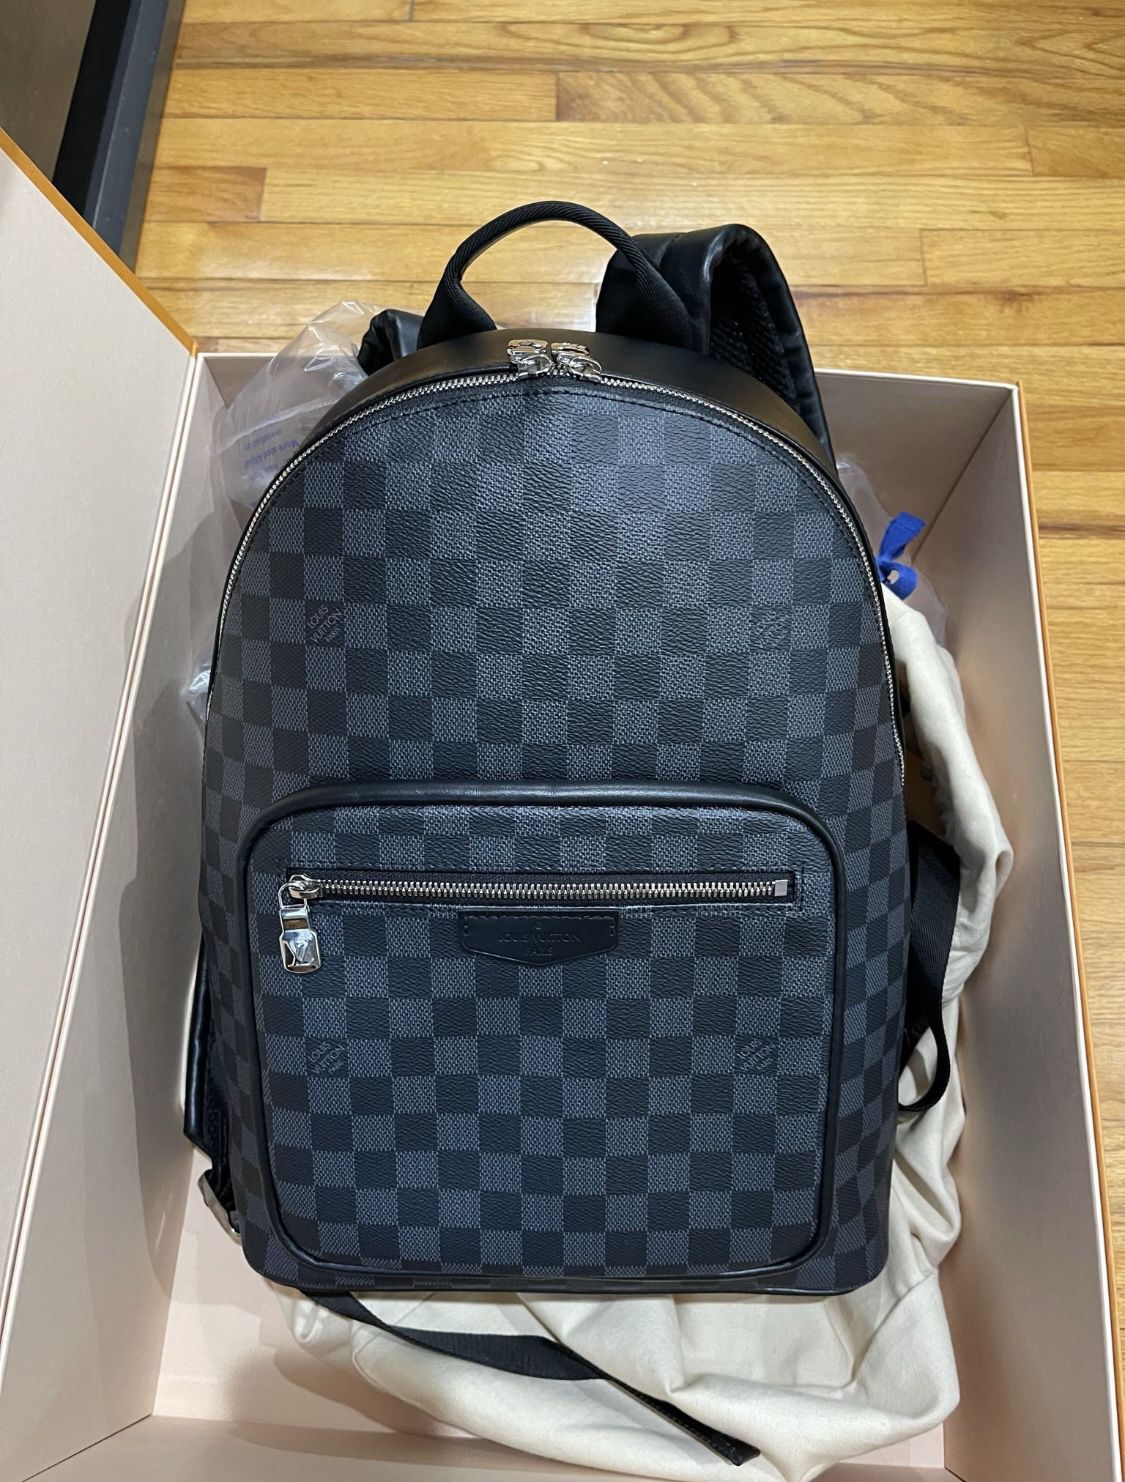 Louis Vuitton “Josh” Backpack for Sale in Windsor Hills, CA - OfferUp